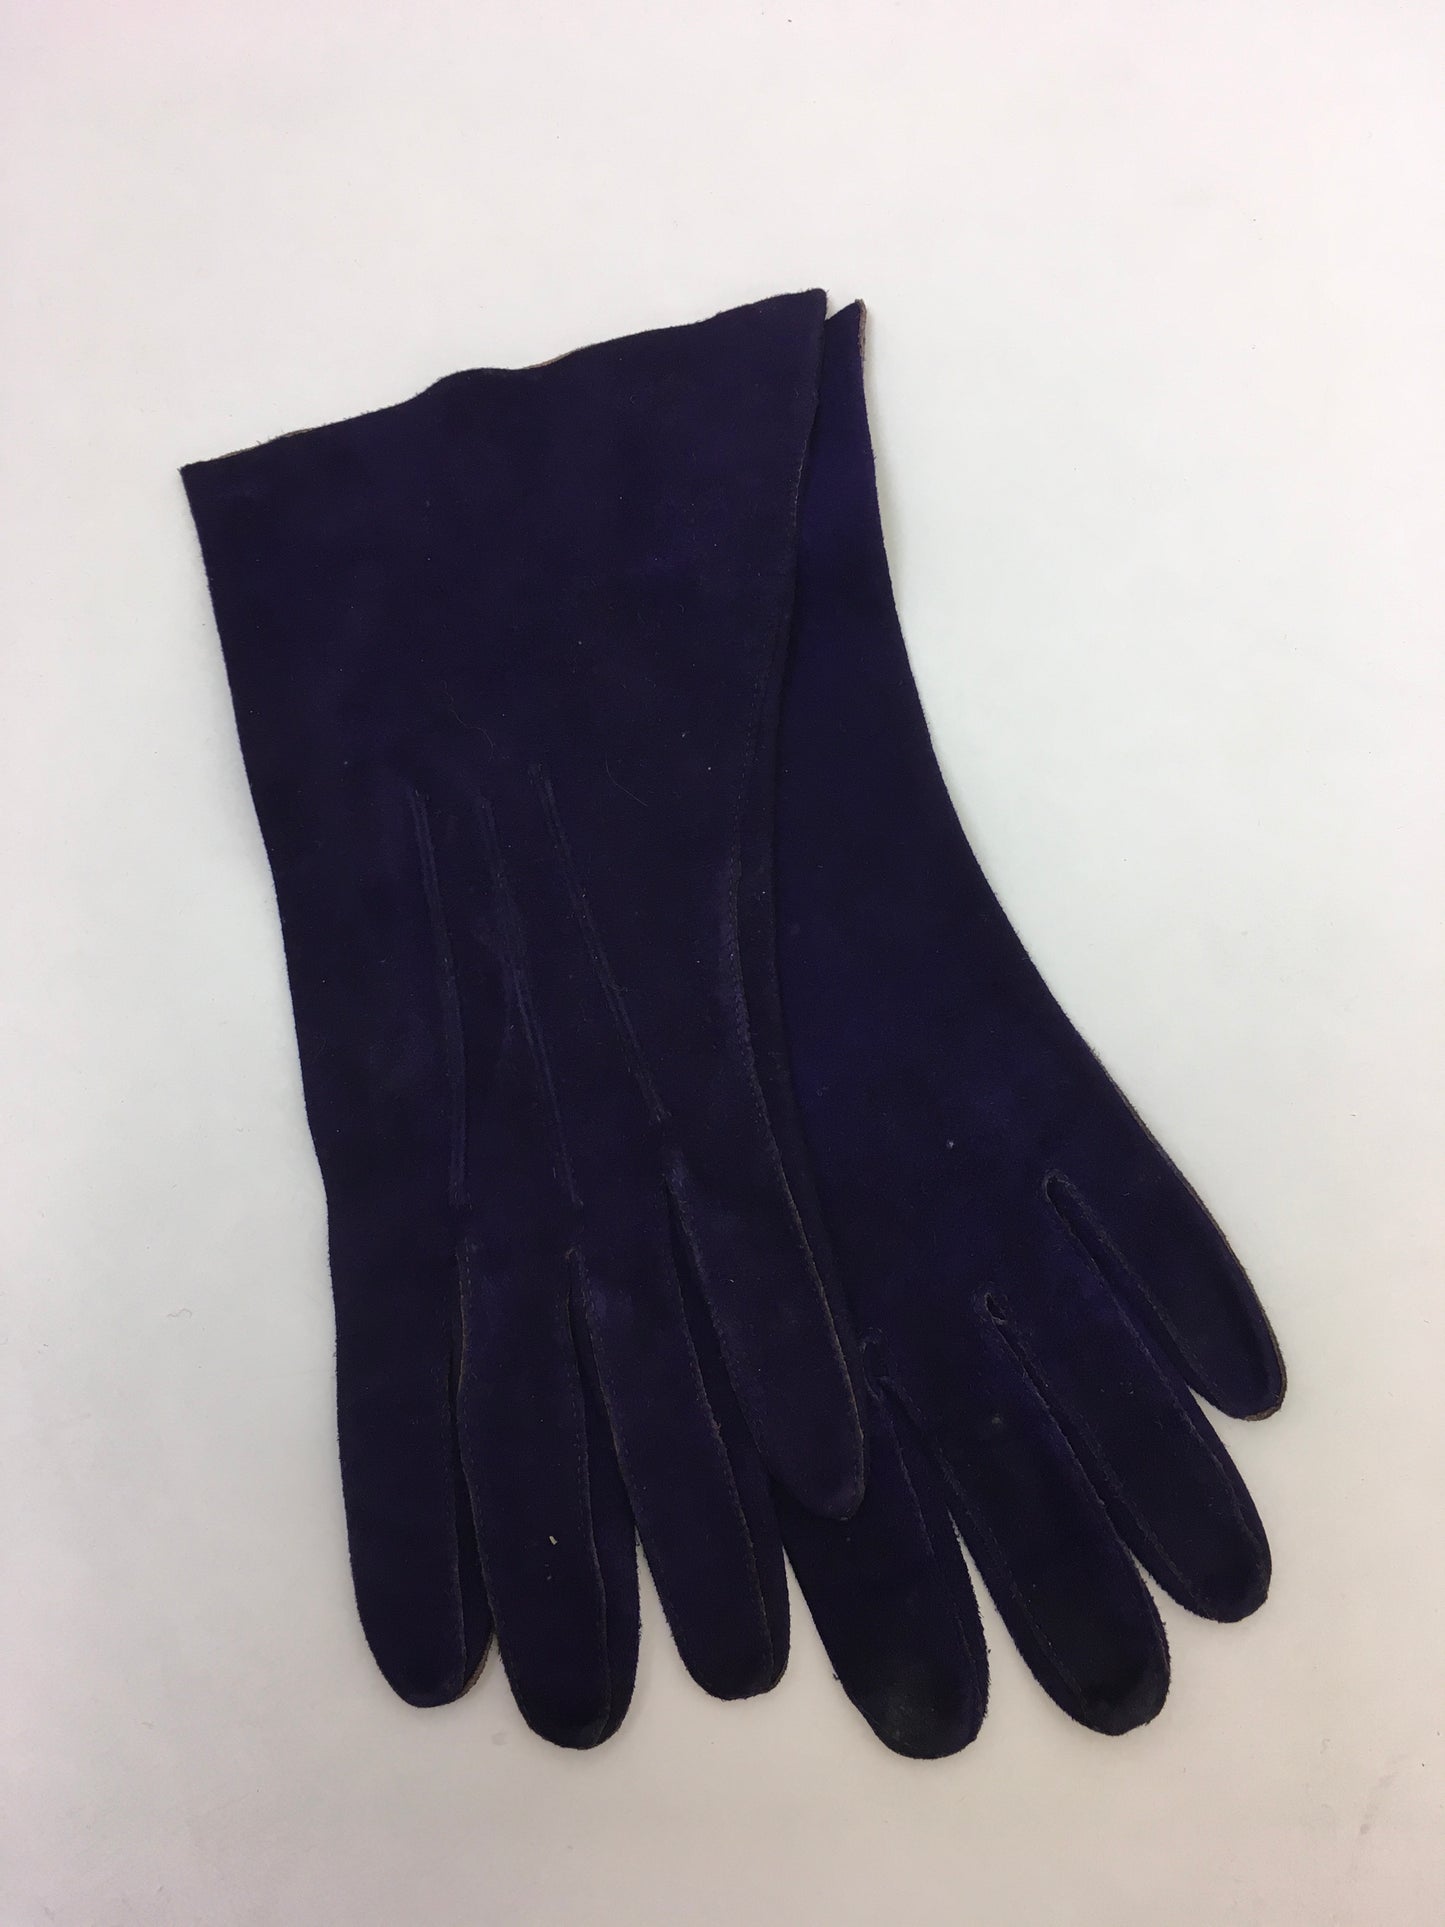 Original 1940's Sublime CC41 Utility Gloves - In Cadbury Rich Purple Suede